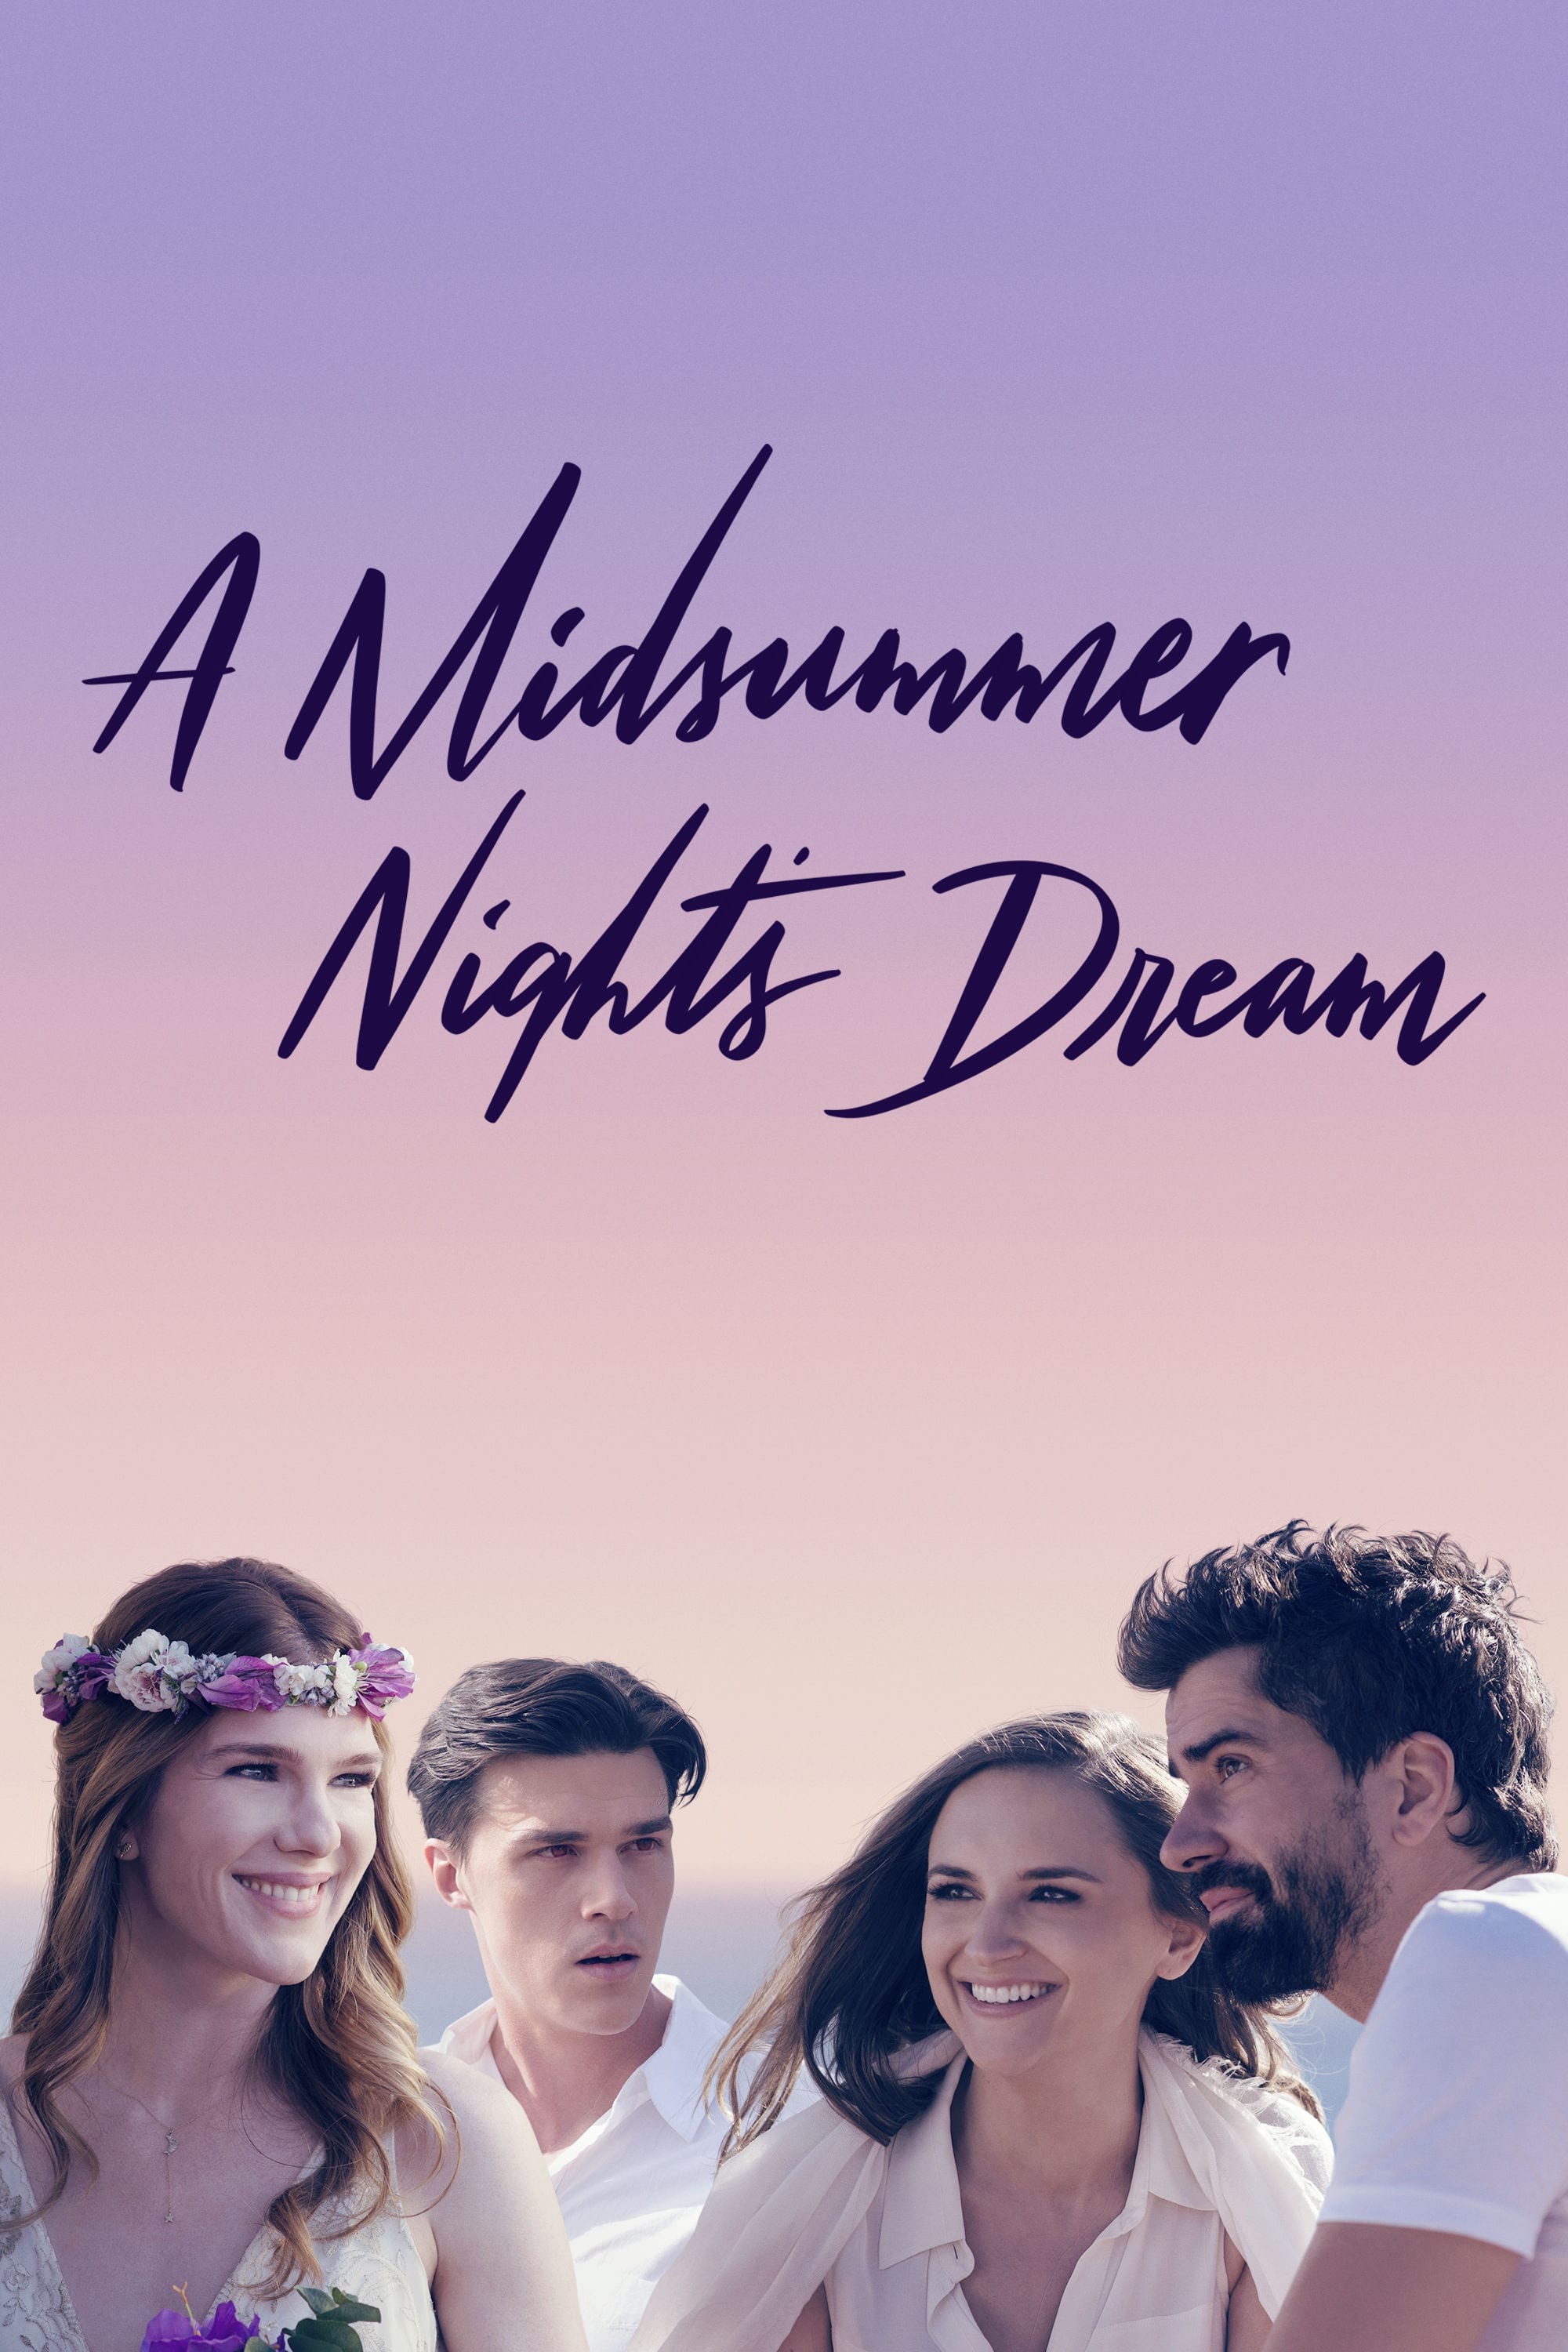 A Midsummer Night's Dream (2018)